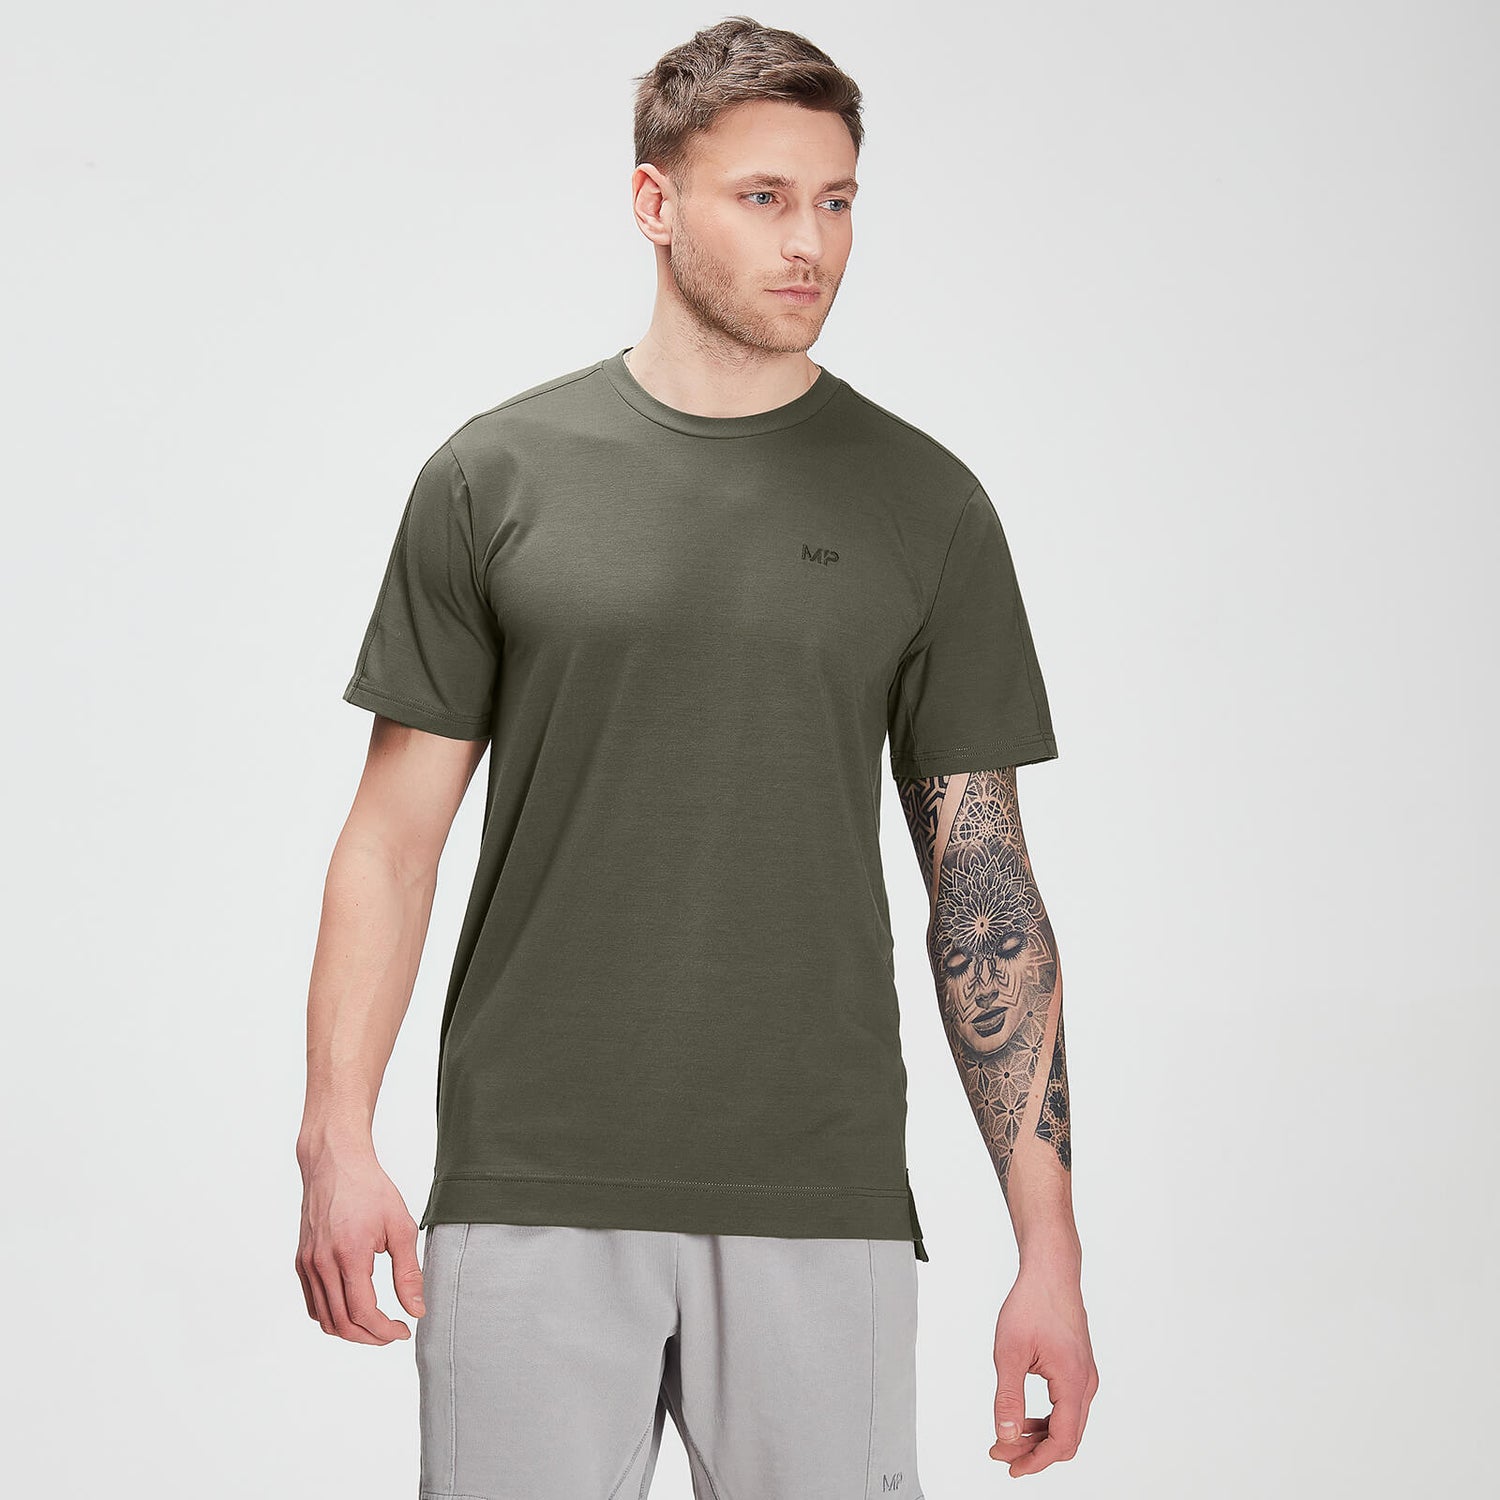 MP Men's Training drirelease® Short Sleeve T-shirt – Dark Olive - XXXL